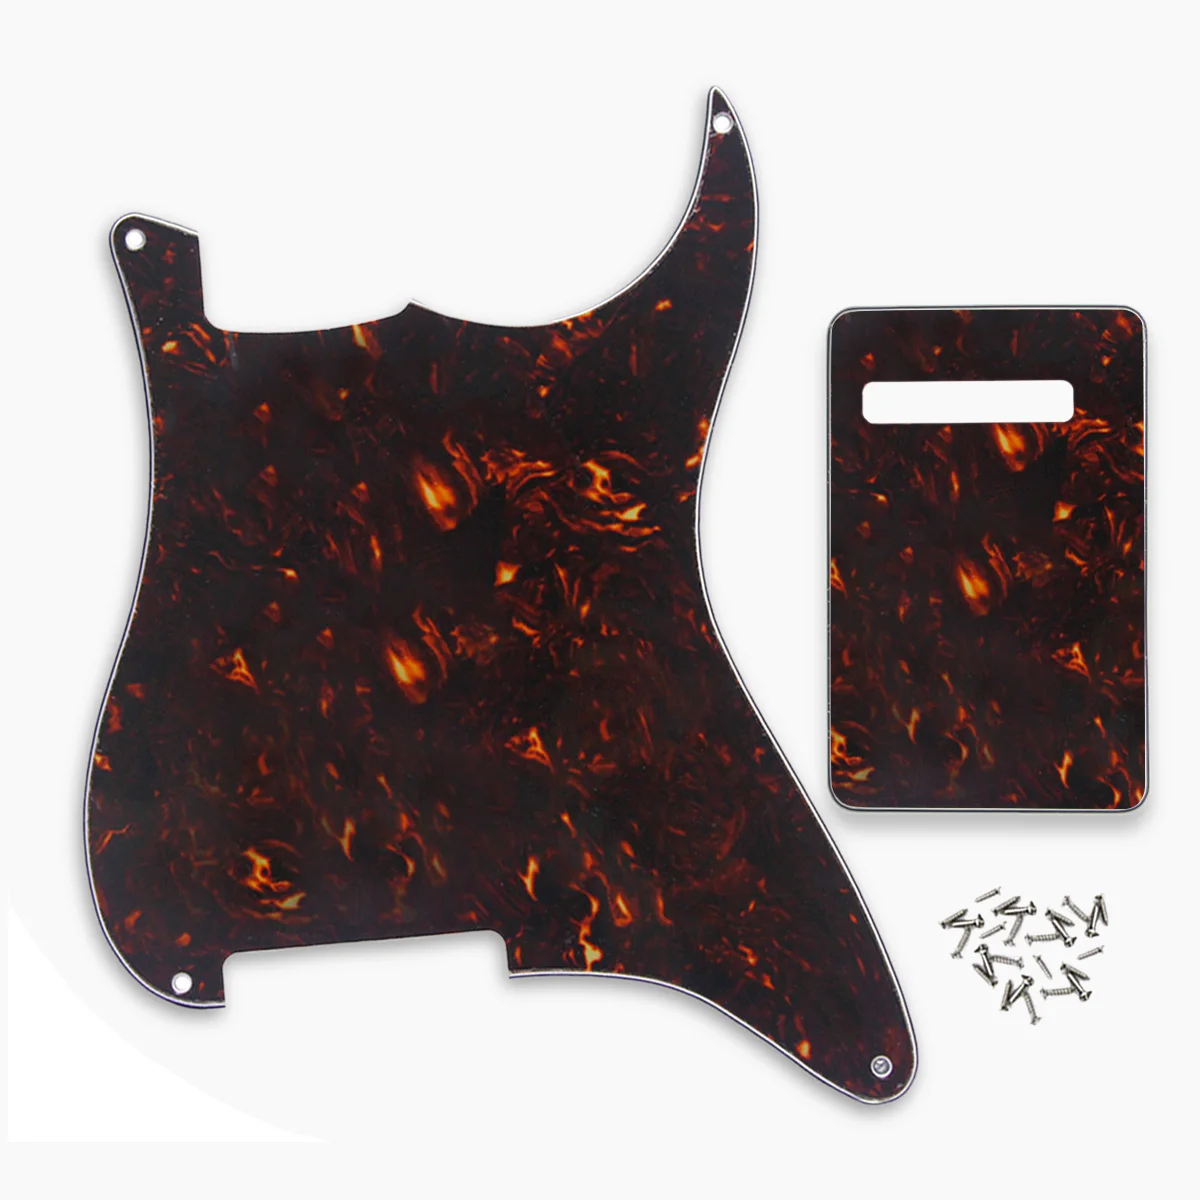 Milisten Blank Guitar Pickguard Rectangle Tortoise Shell Material Scratch Plate for Fender Acoustic Telecaster Guitar Bass Black